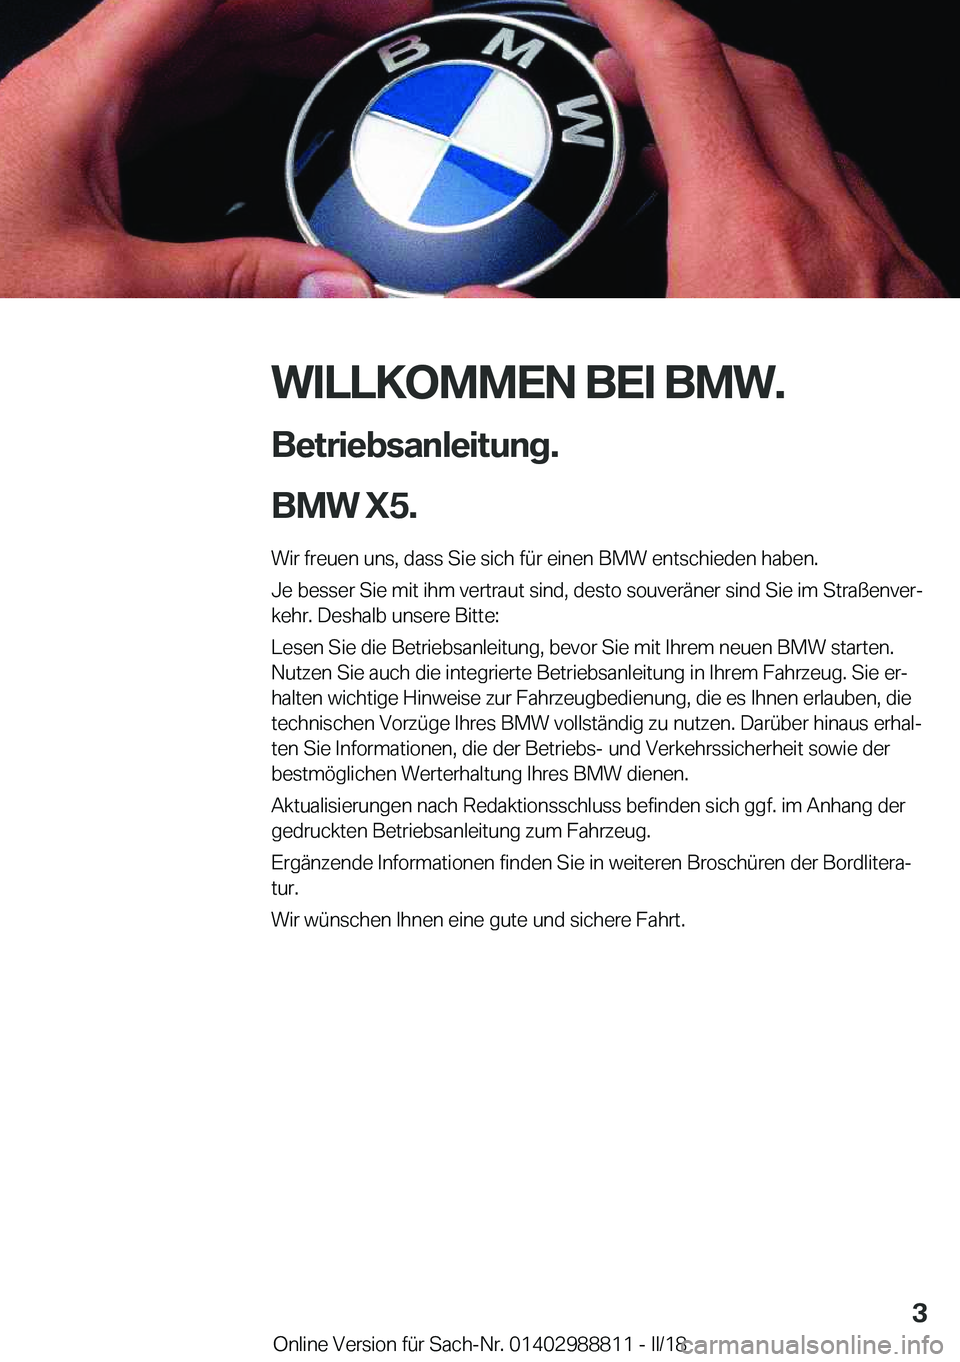 BMW X5 2018  Betriebsanleitungen (in German) �W�I�L�L�K�O�M�M�E�N��B�E�I��B�M�W�.�B�e�t�r�i�e�b�s�a�n�l�e�i�t�u�n�g�.
�B�M�W��X�5�. �W�i�r� �f�r�e�u�e�n� �u�n�s�,� �d�a�s�s� �S�i�e� �s�i�c�h� �f�